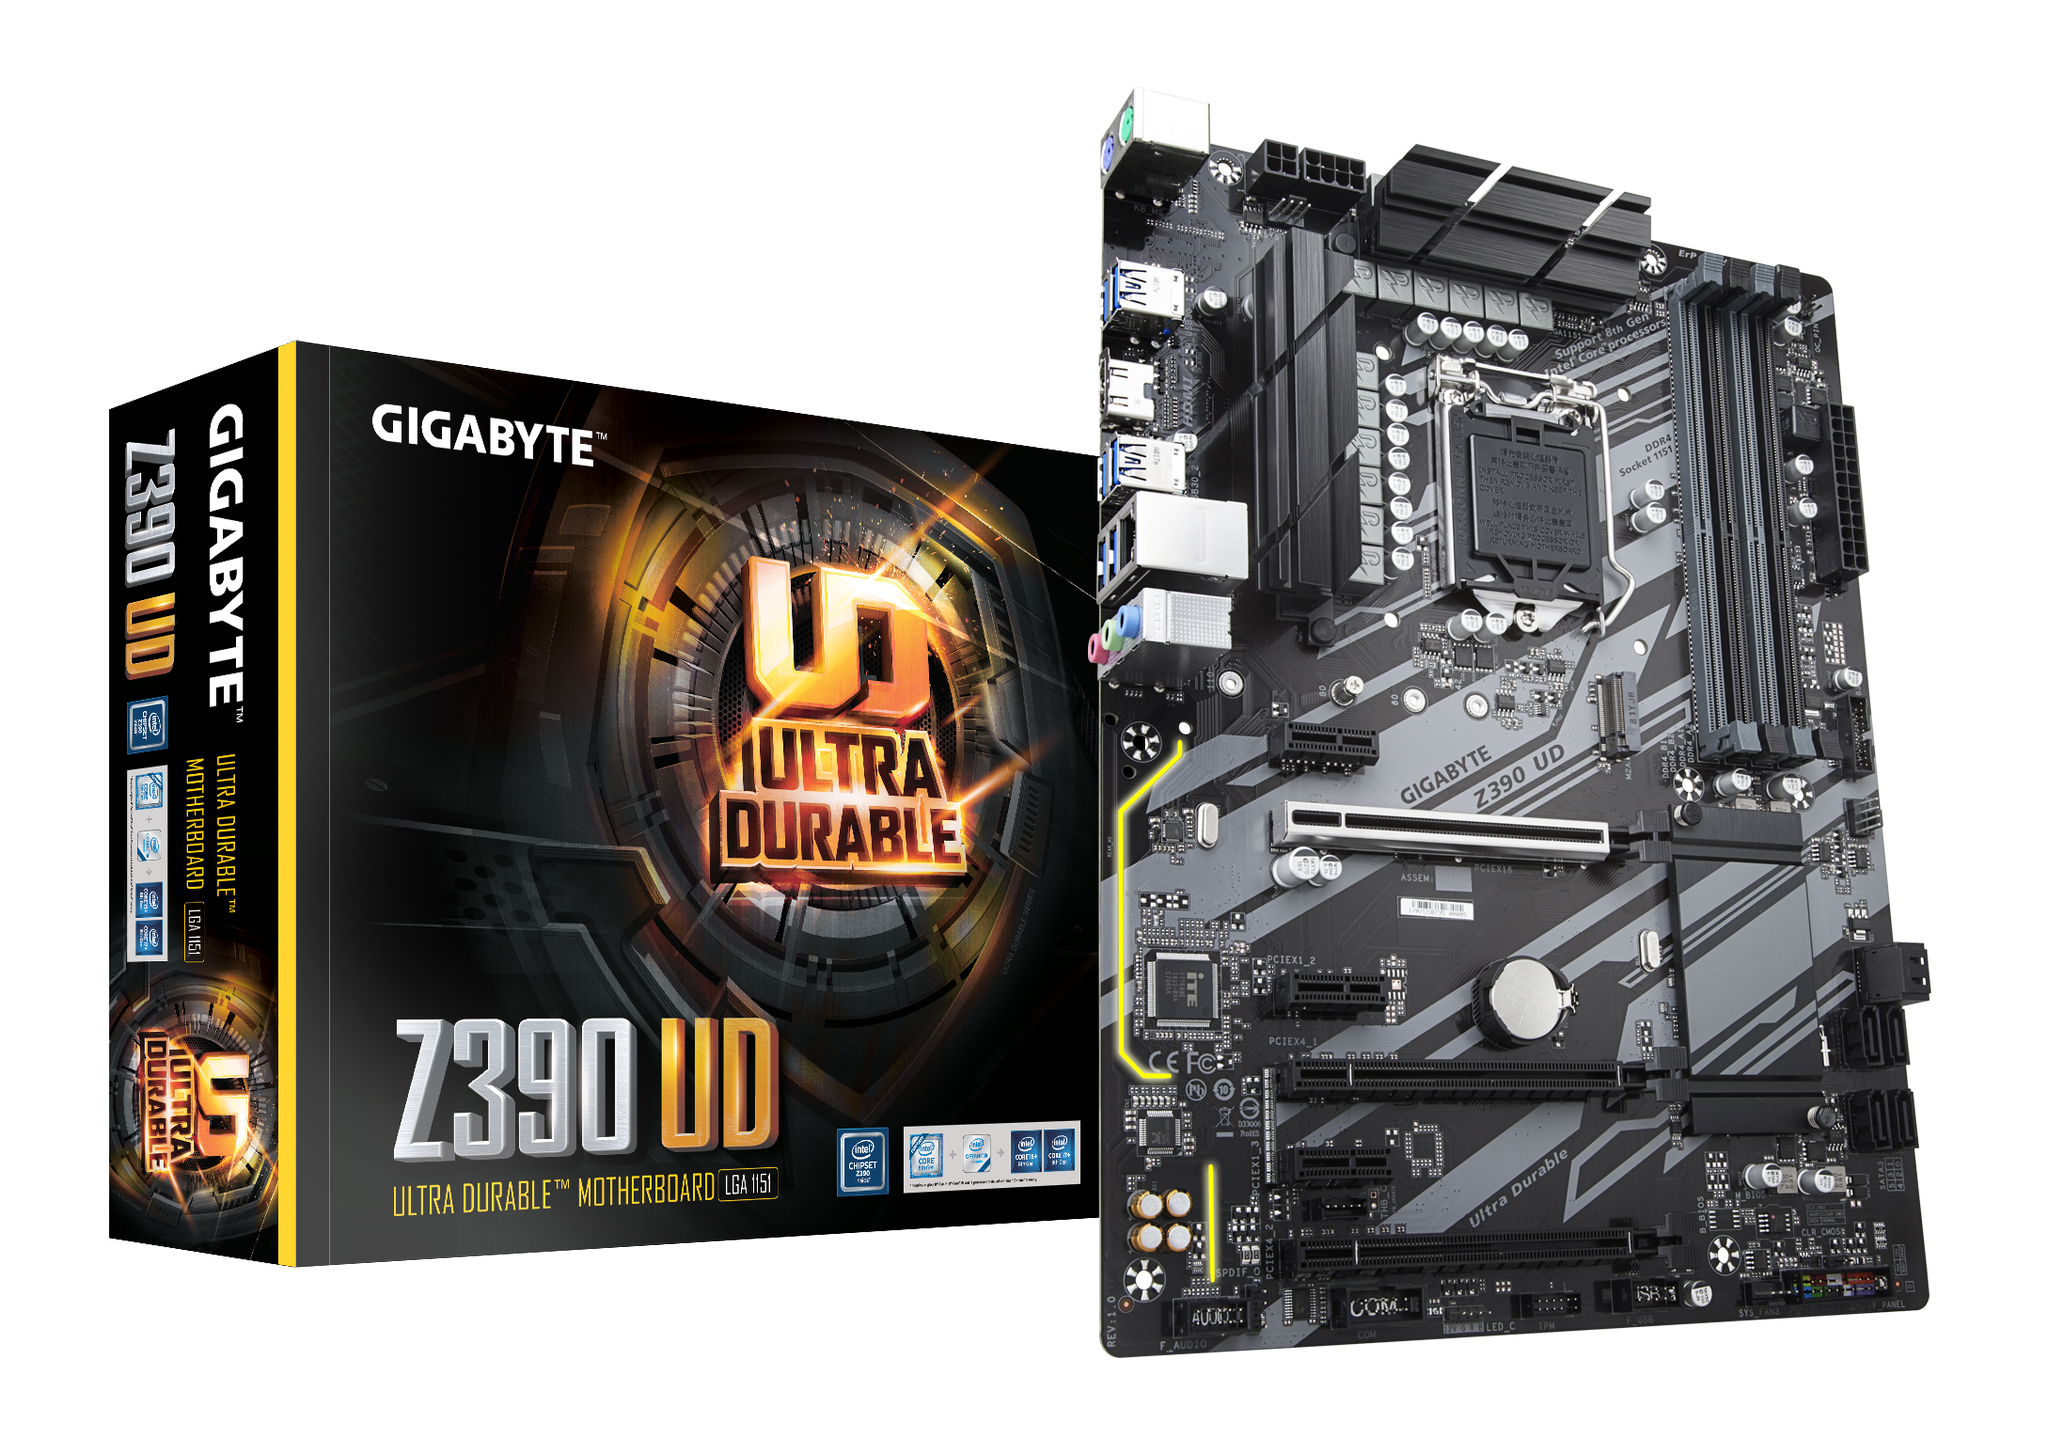 Gigabyte - Gigabyte Z390 UD Intel Z390 (Socket 1151) DDR4 ATX Motherboard